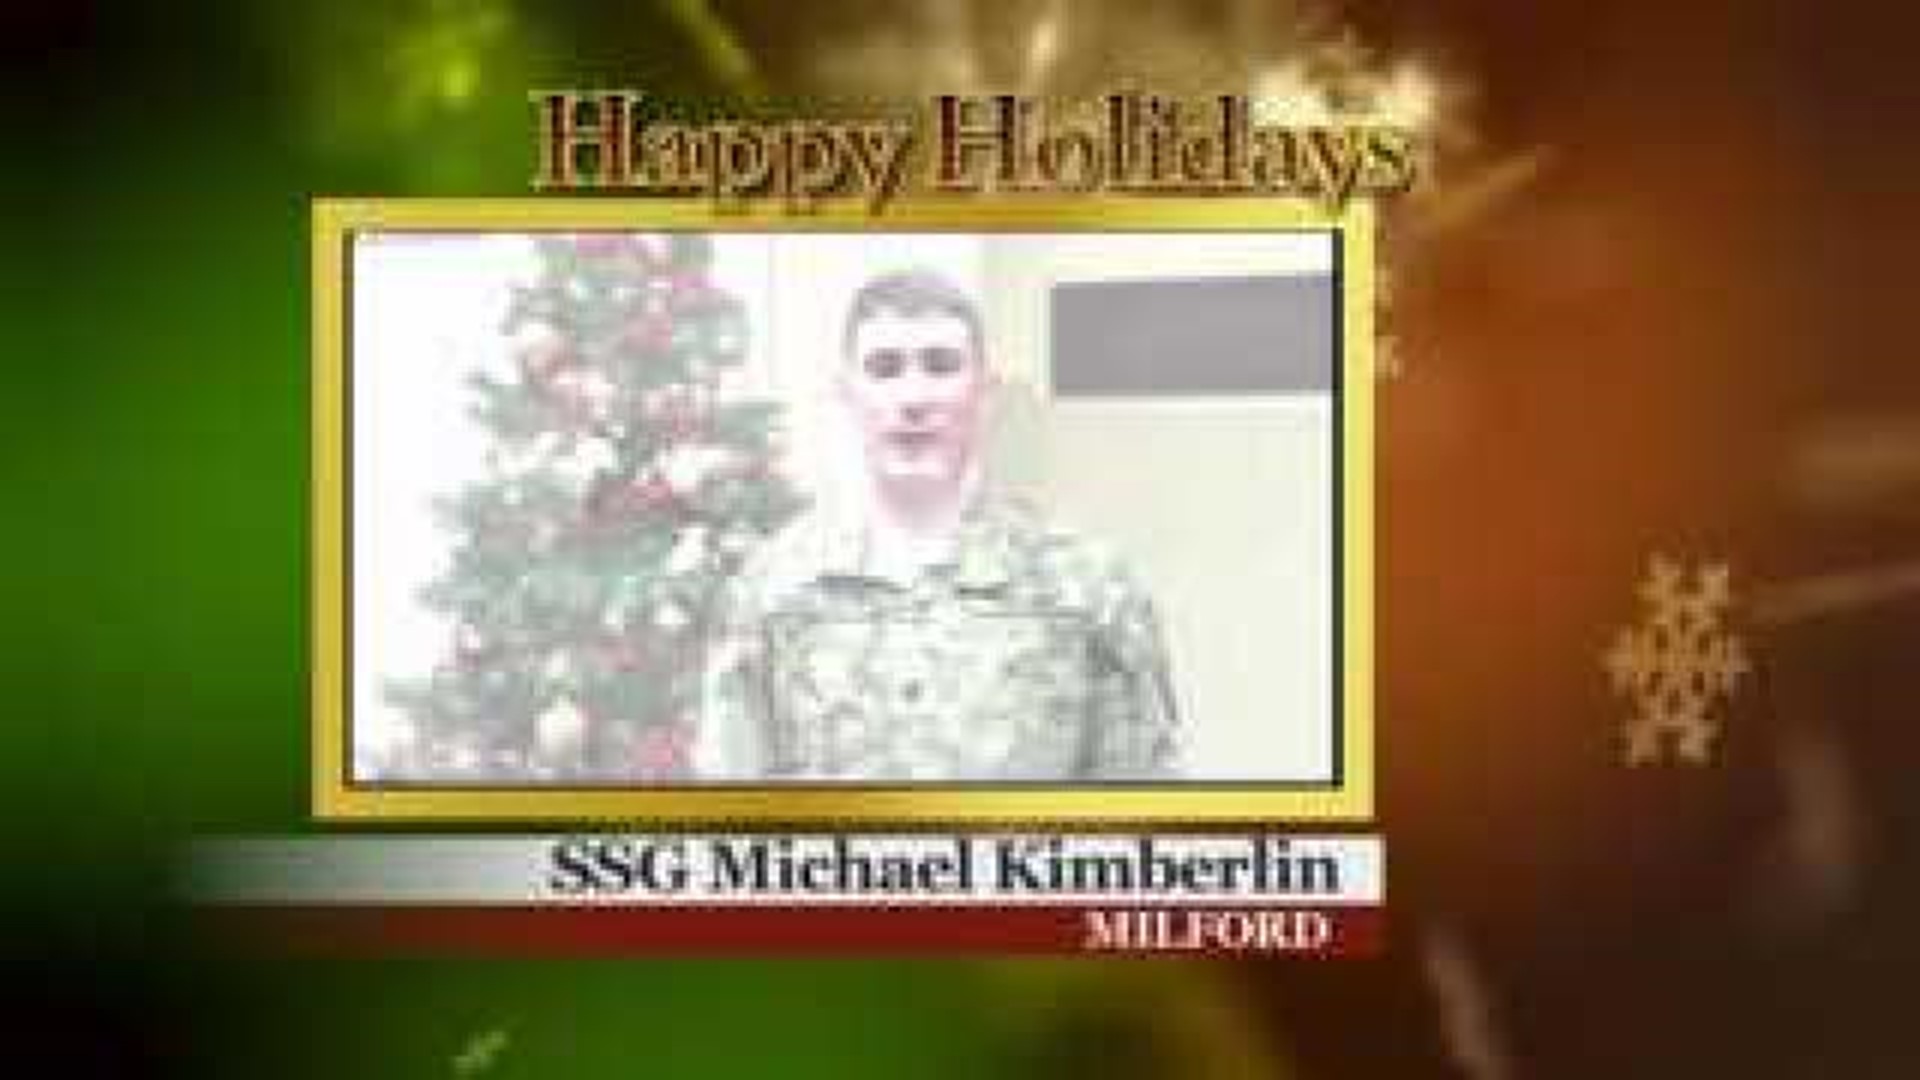 Military Greeting: SSG Michael Kimberlin